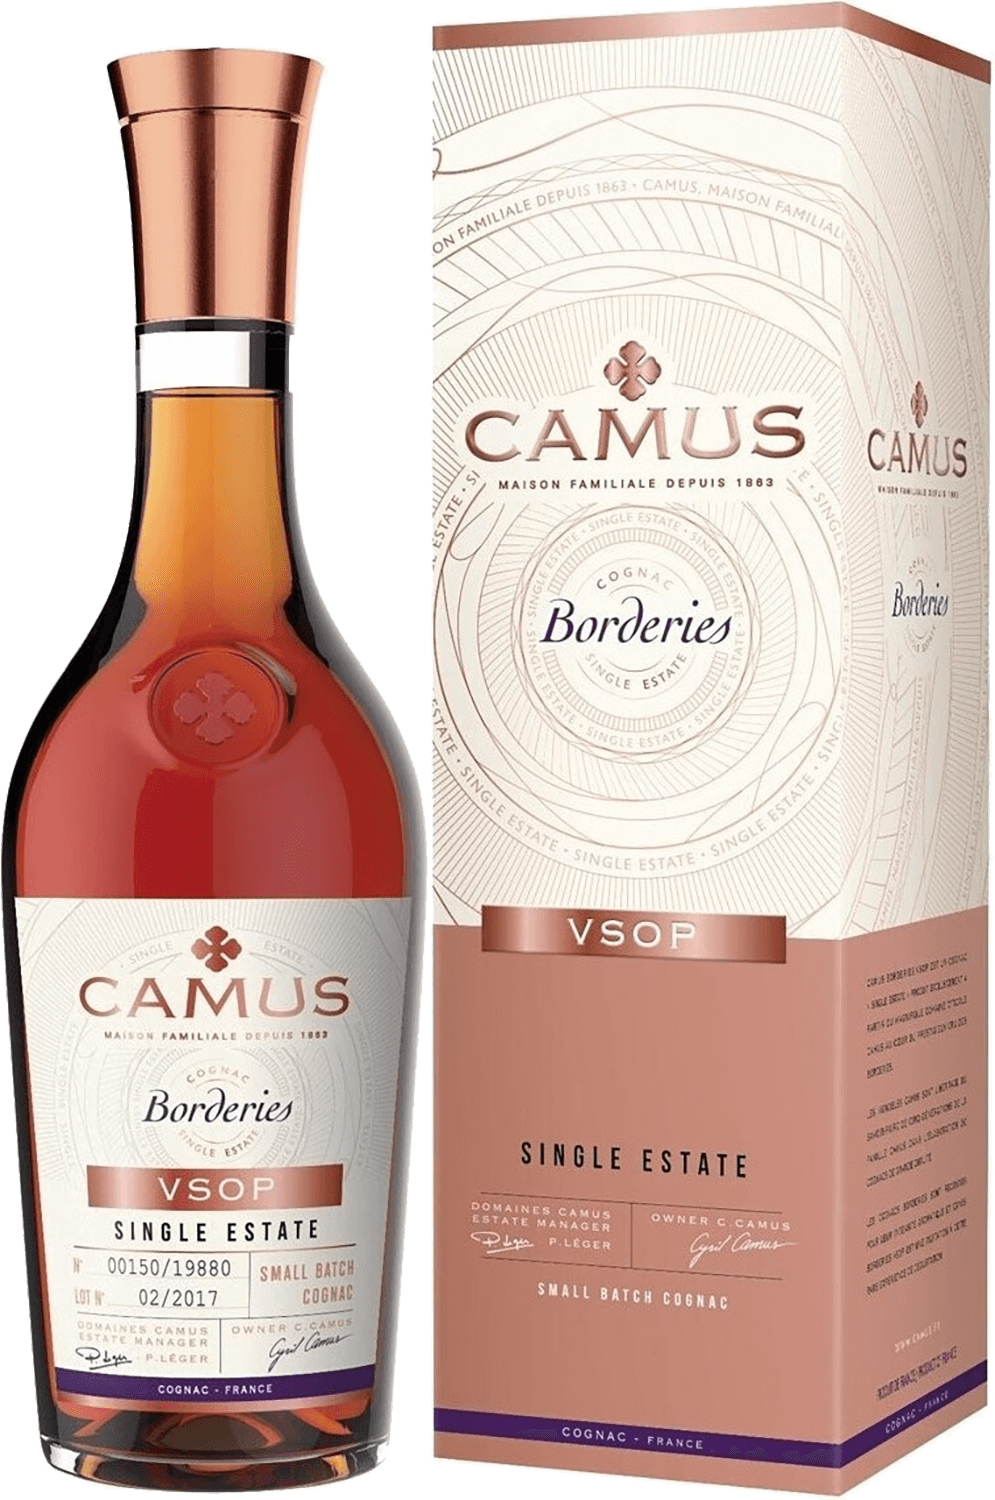 Camus Borderies Cognac VSOP (gift box) camus vs gift box